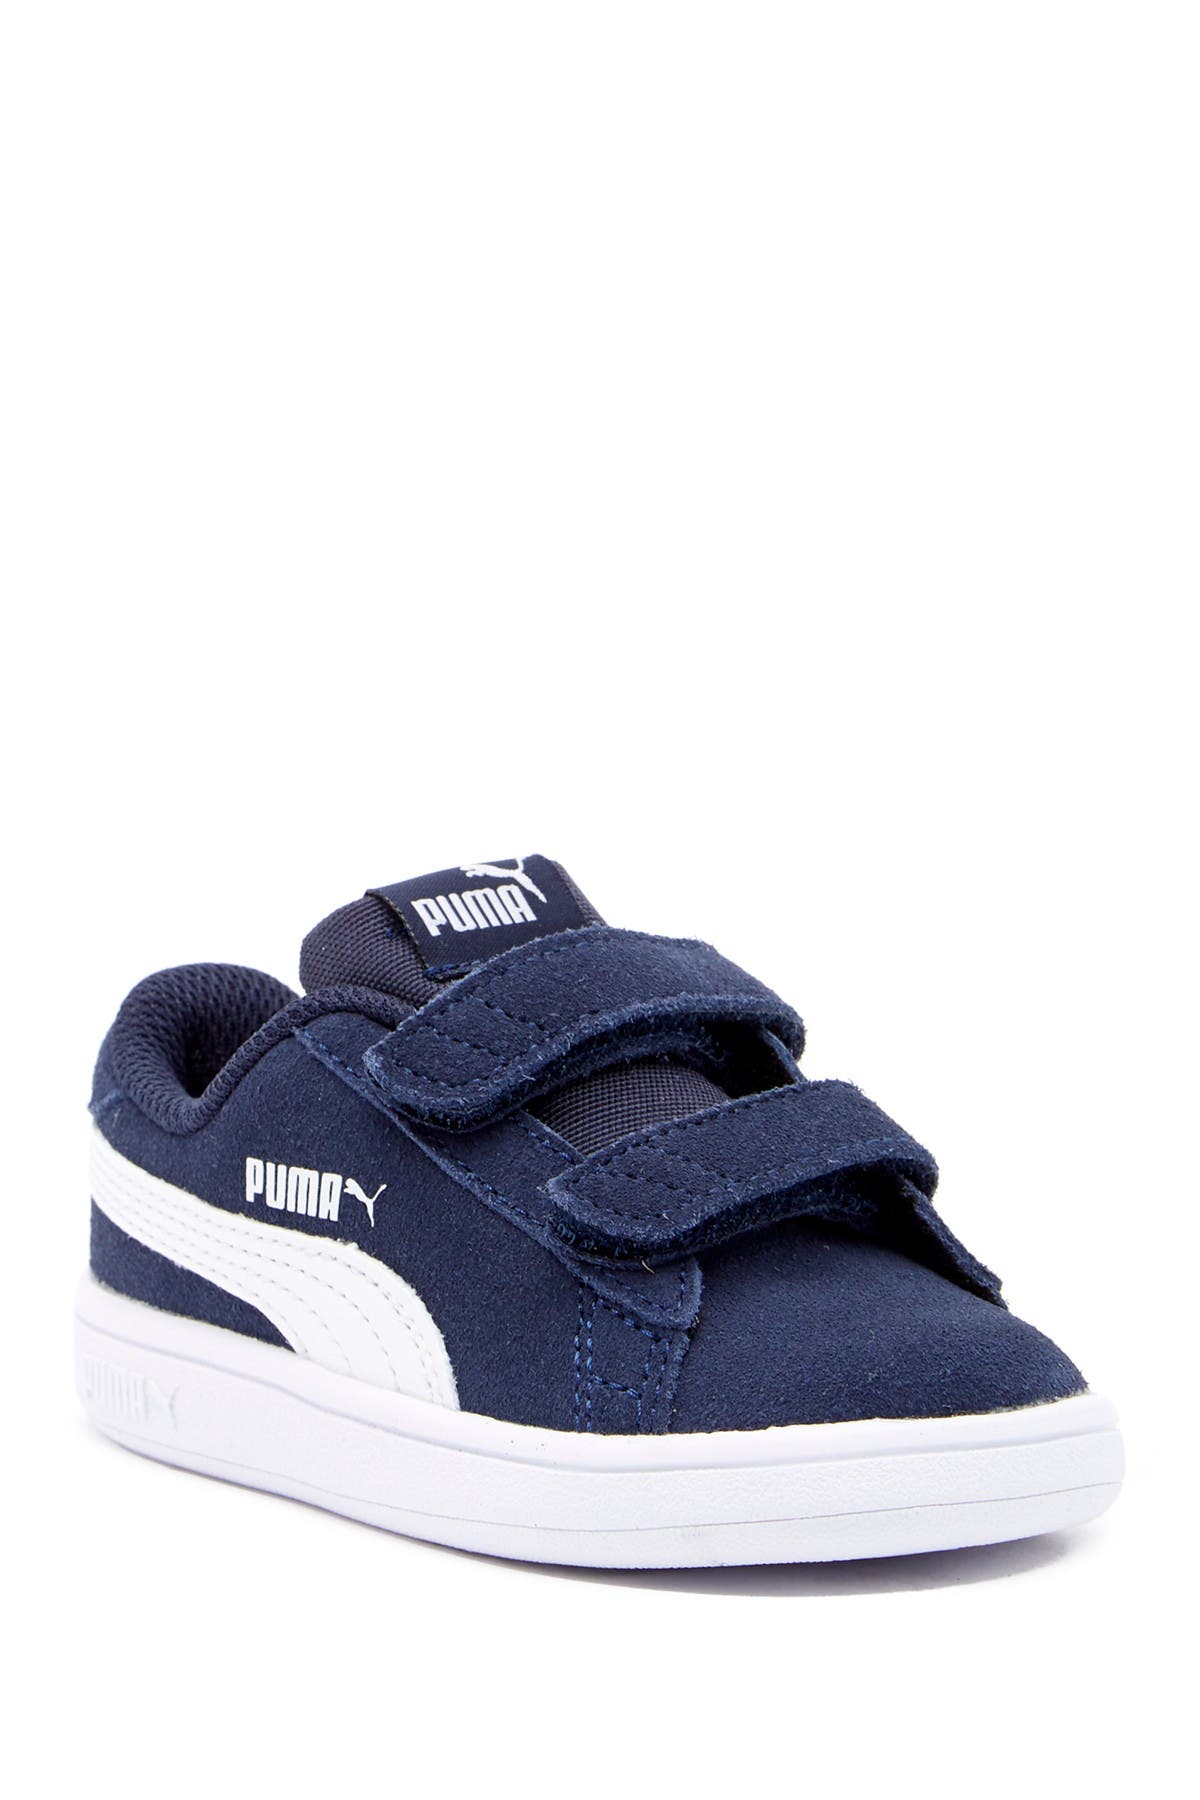 puma baby blue shoes